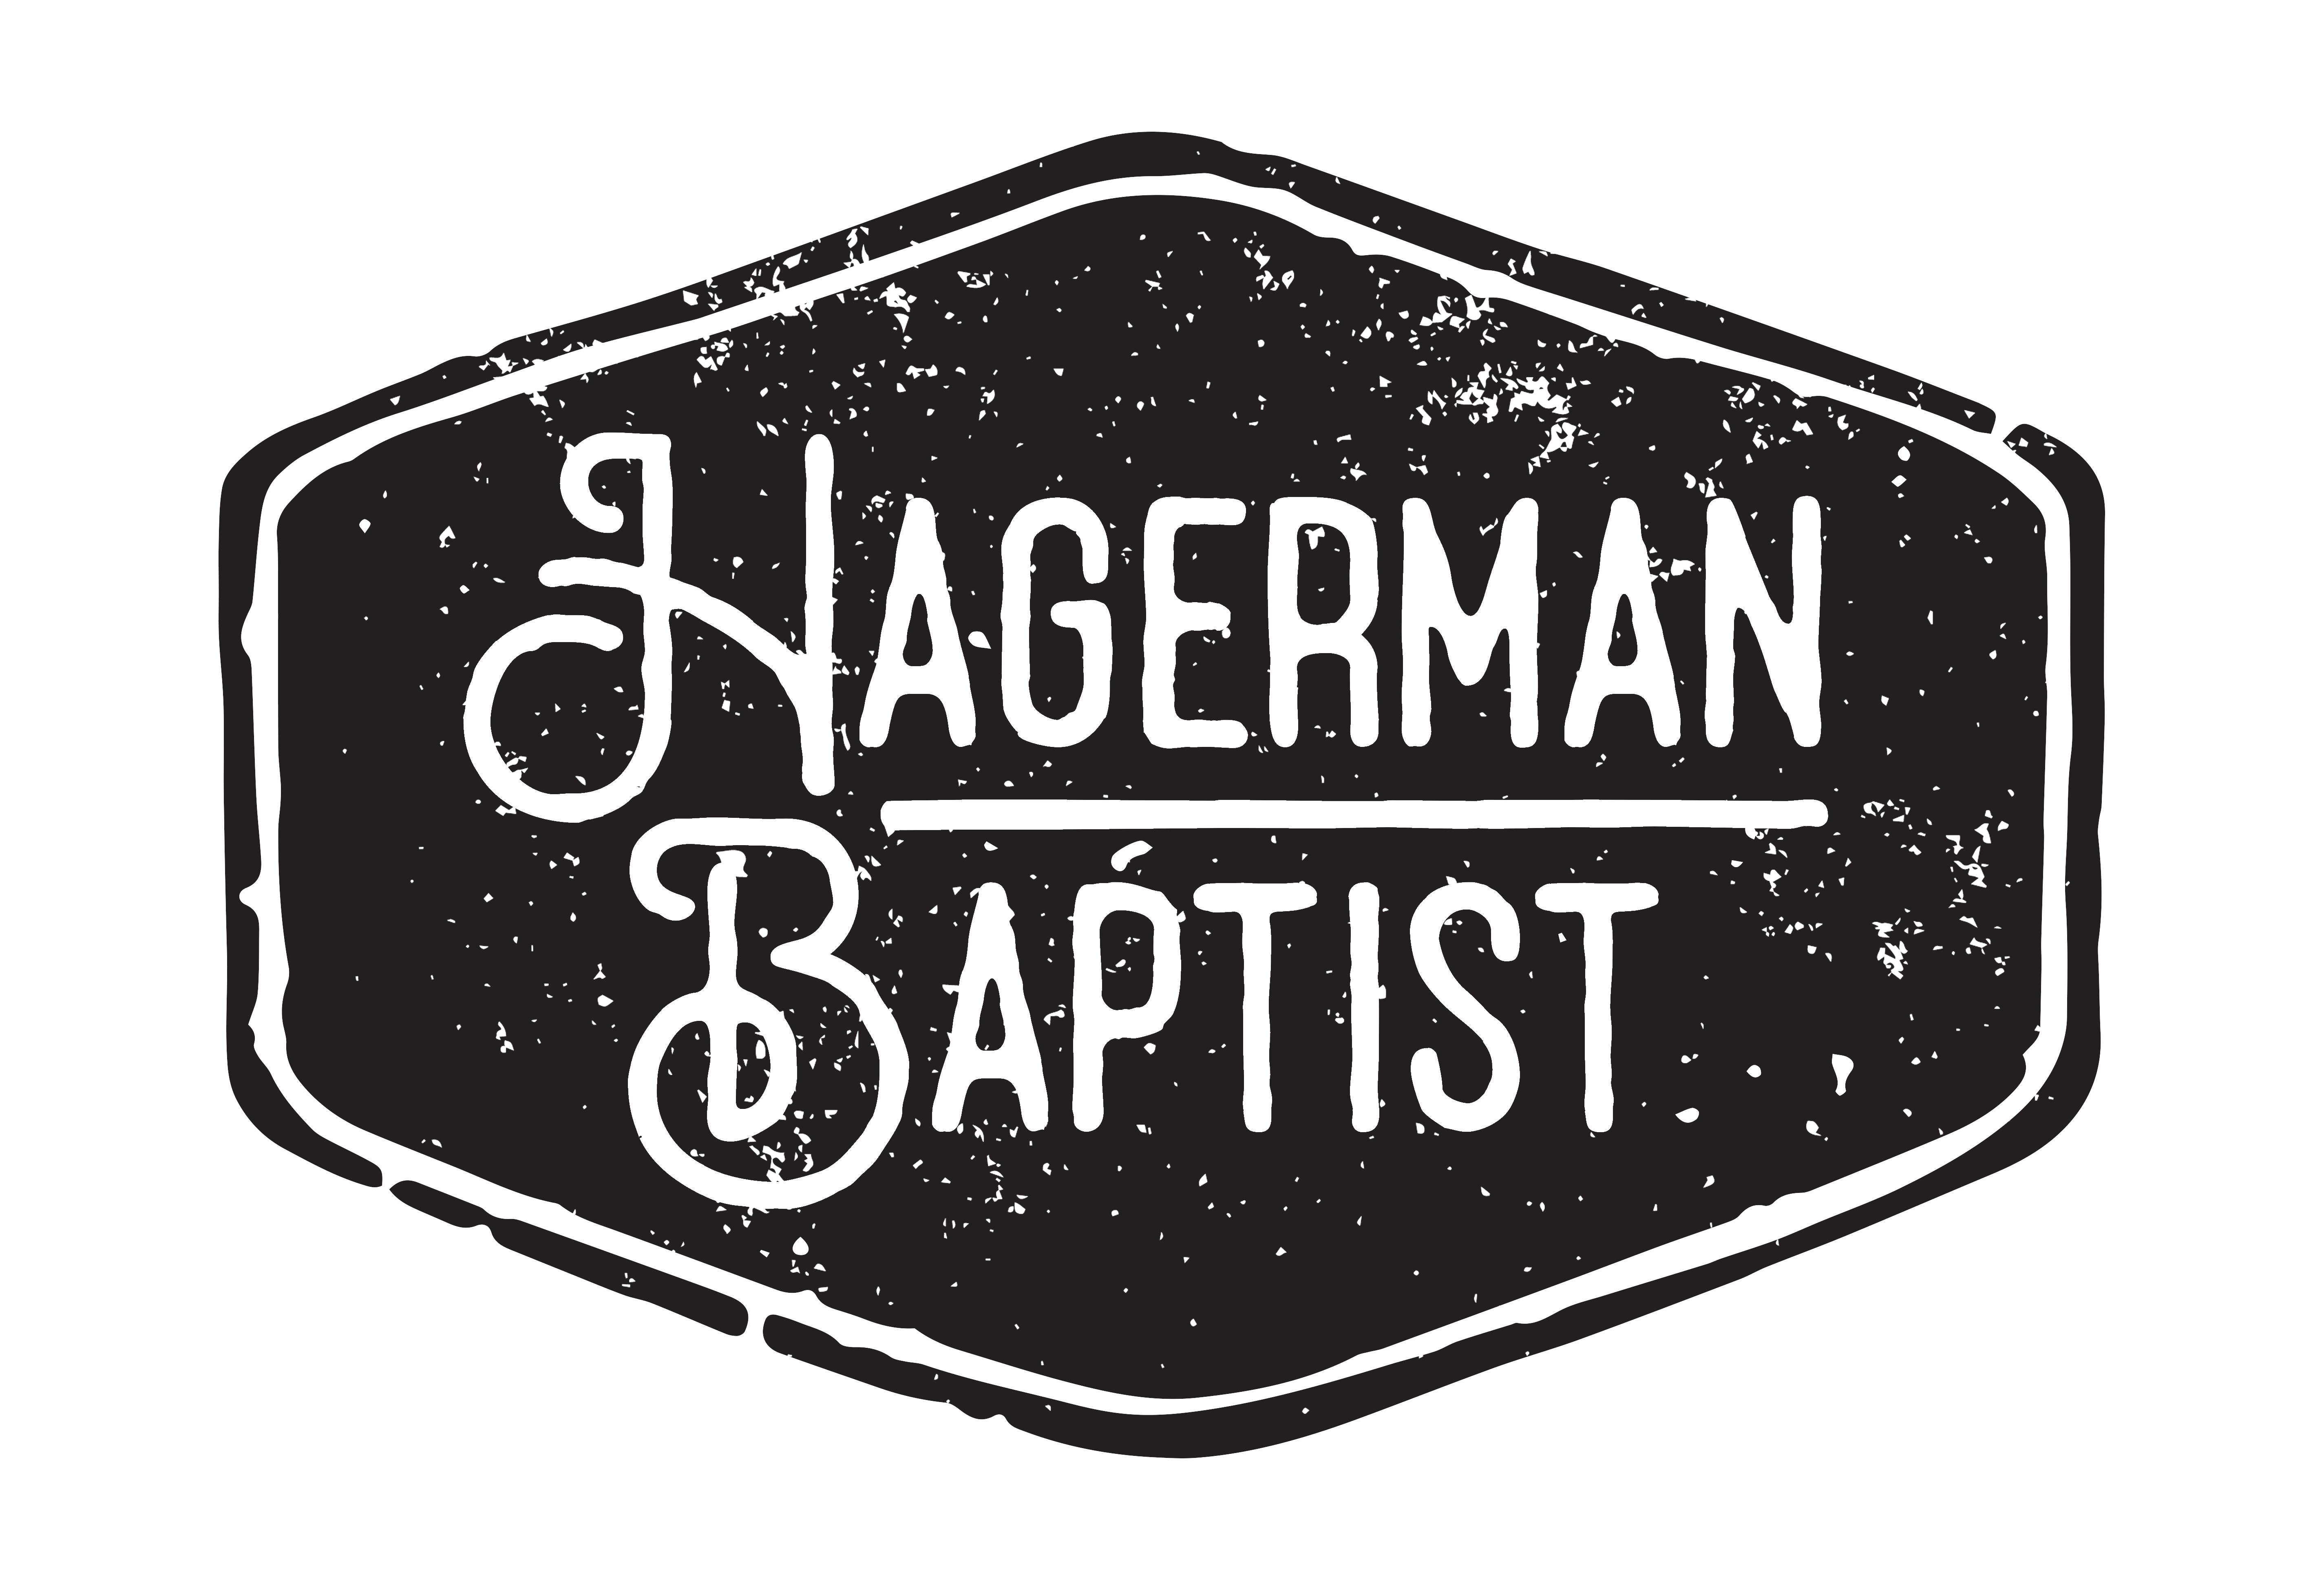 Hagerman Baptist Church